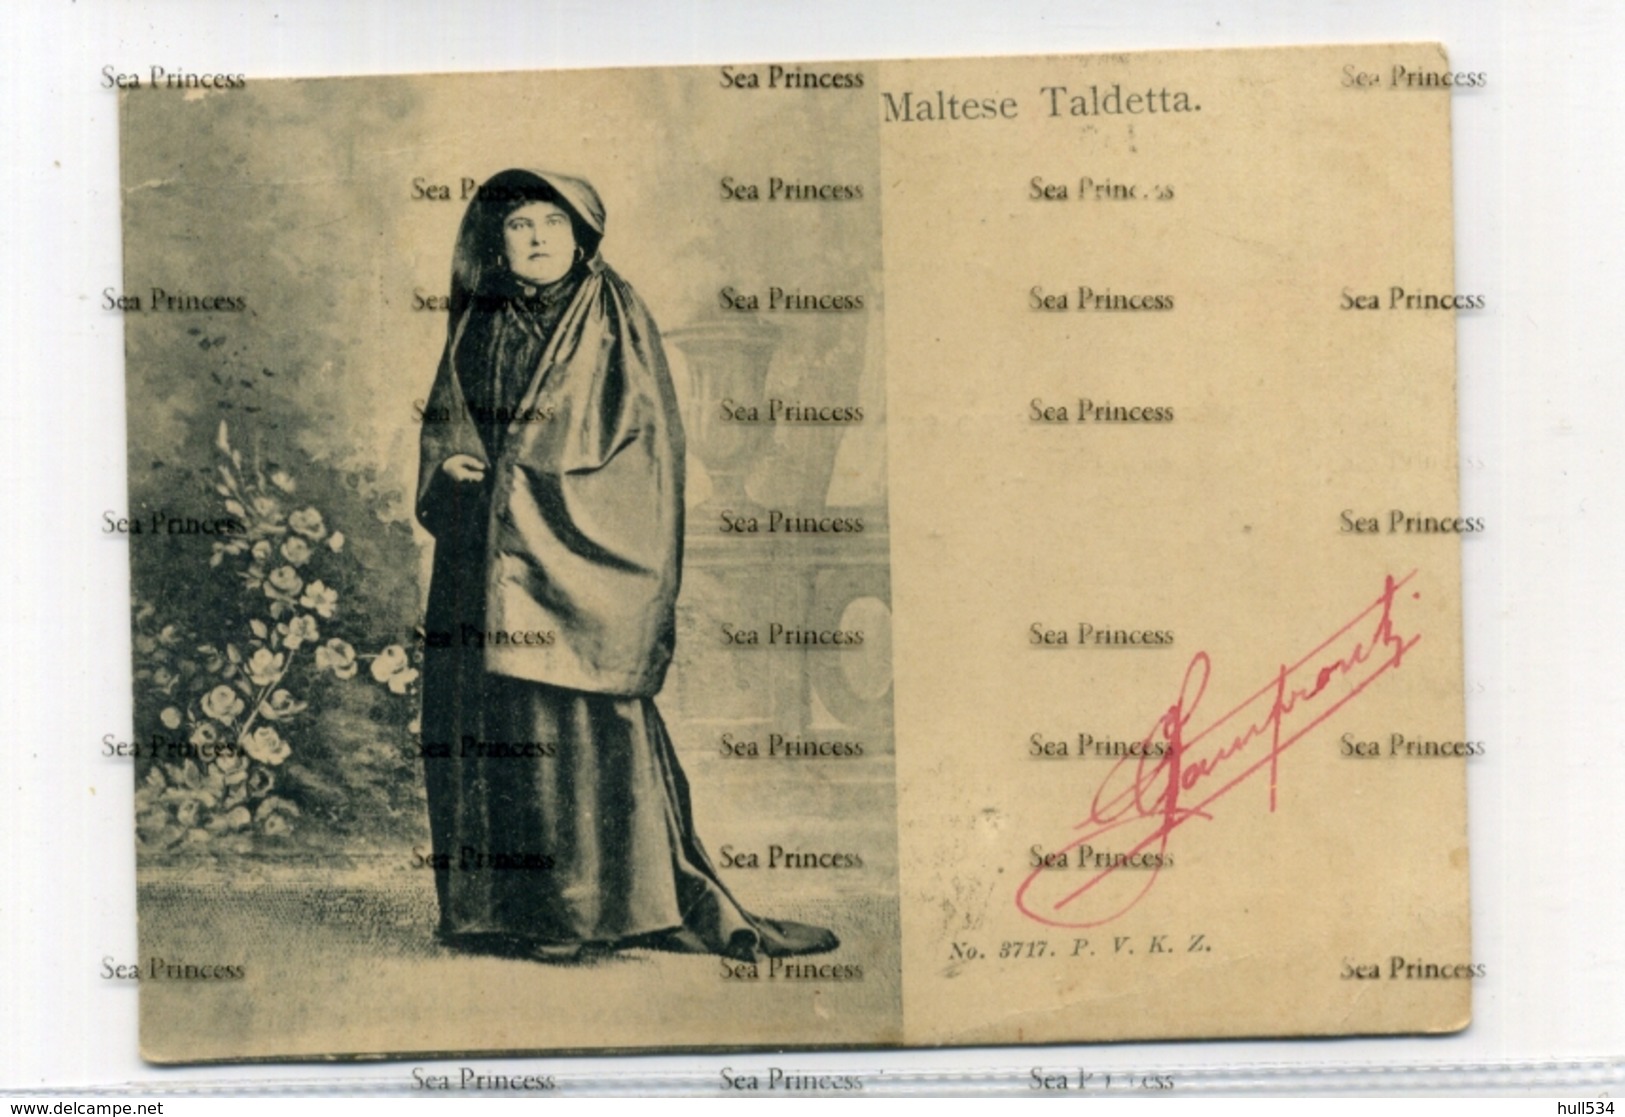 Malta 1900s Court Size Postcard Stamp Removed Maltese Taldetta No.3717 PVKZ - Malte